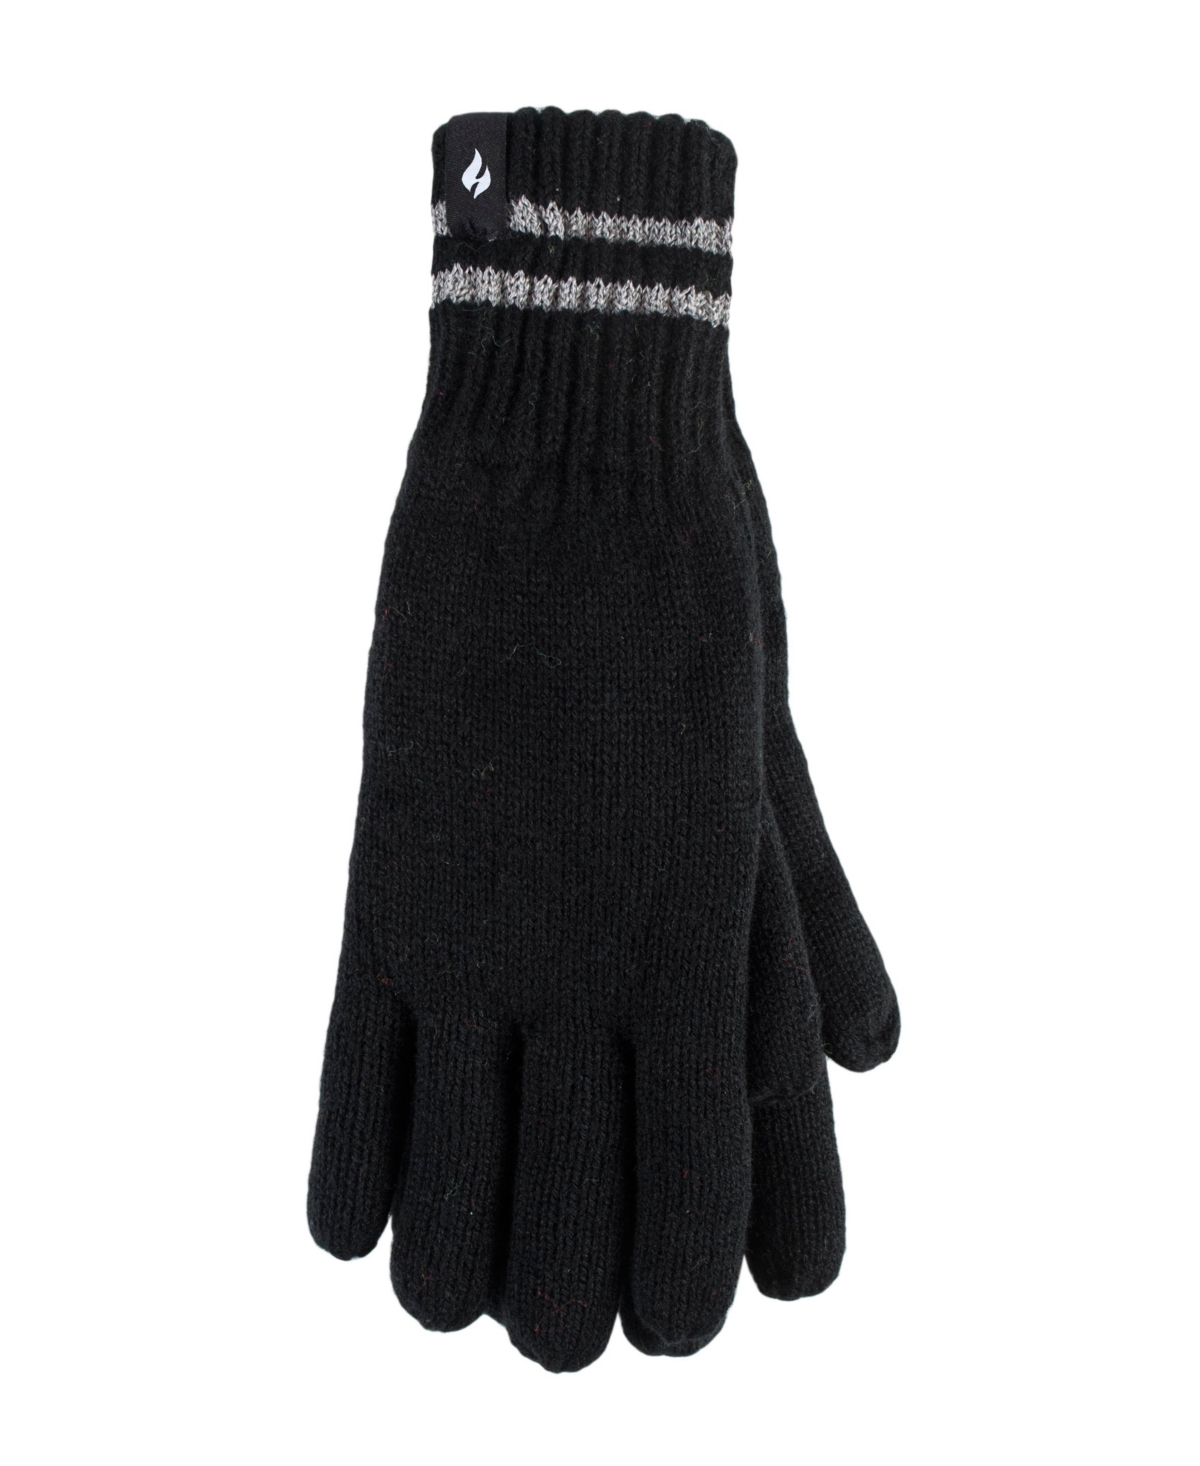 Men's Worxx Richard Flat Knit Gloves - Black